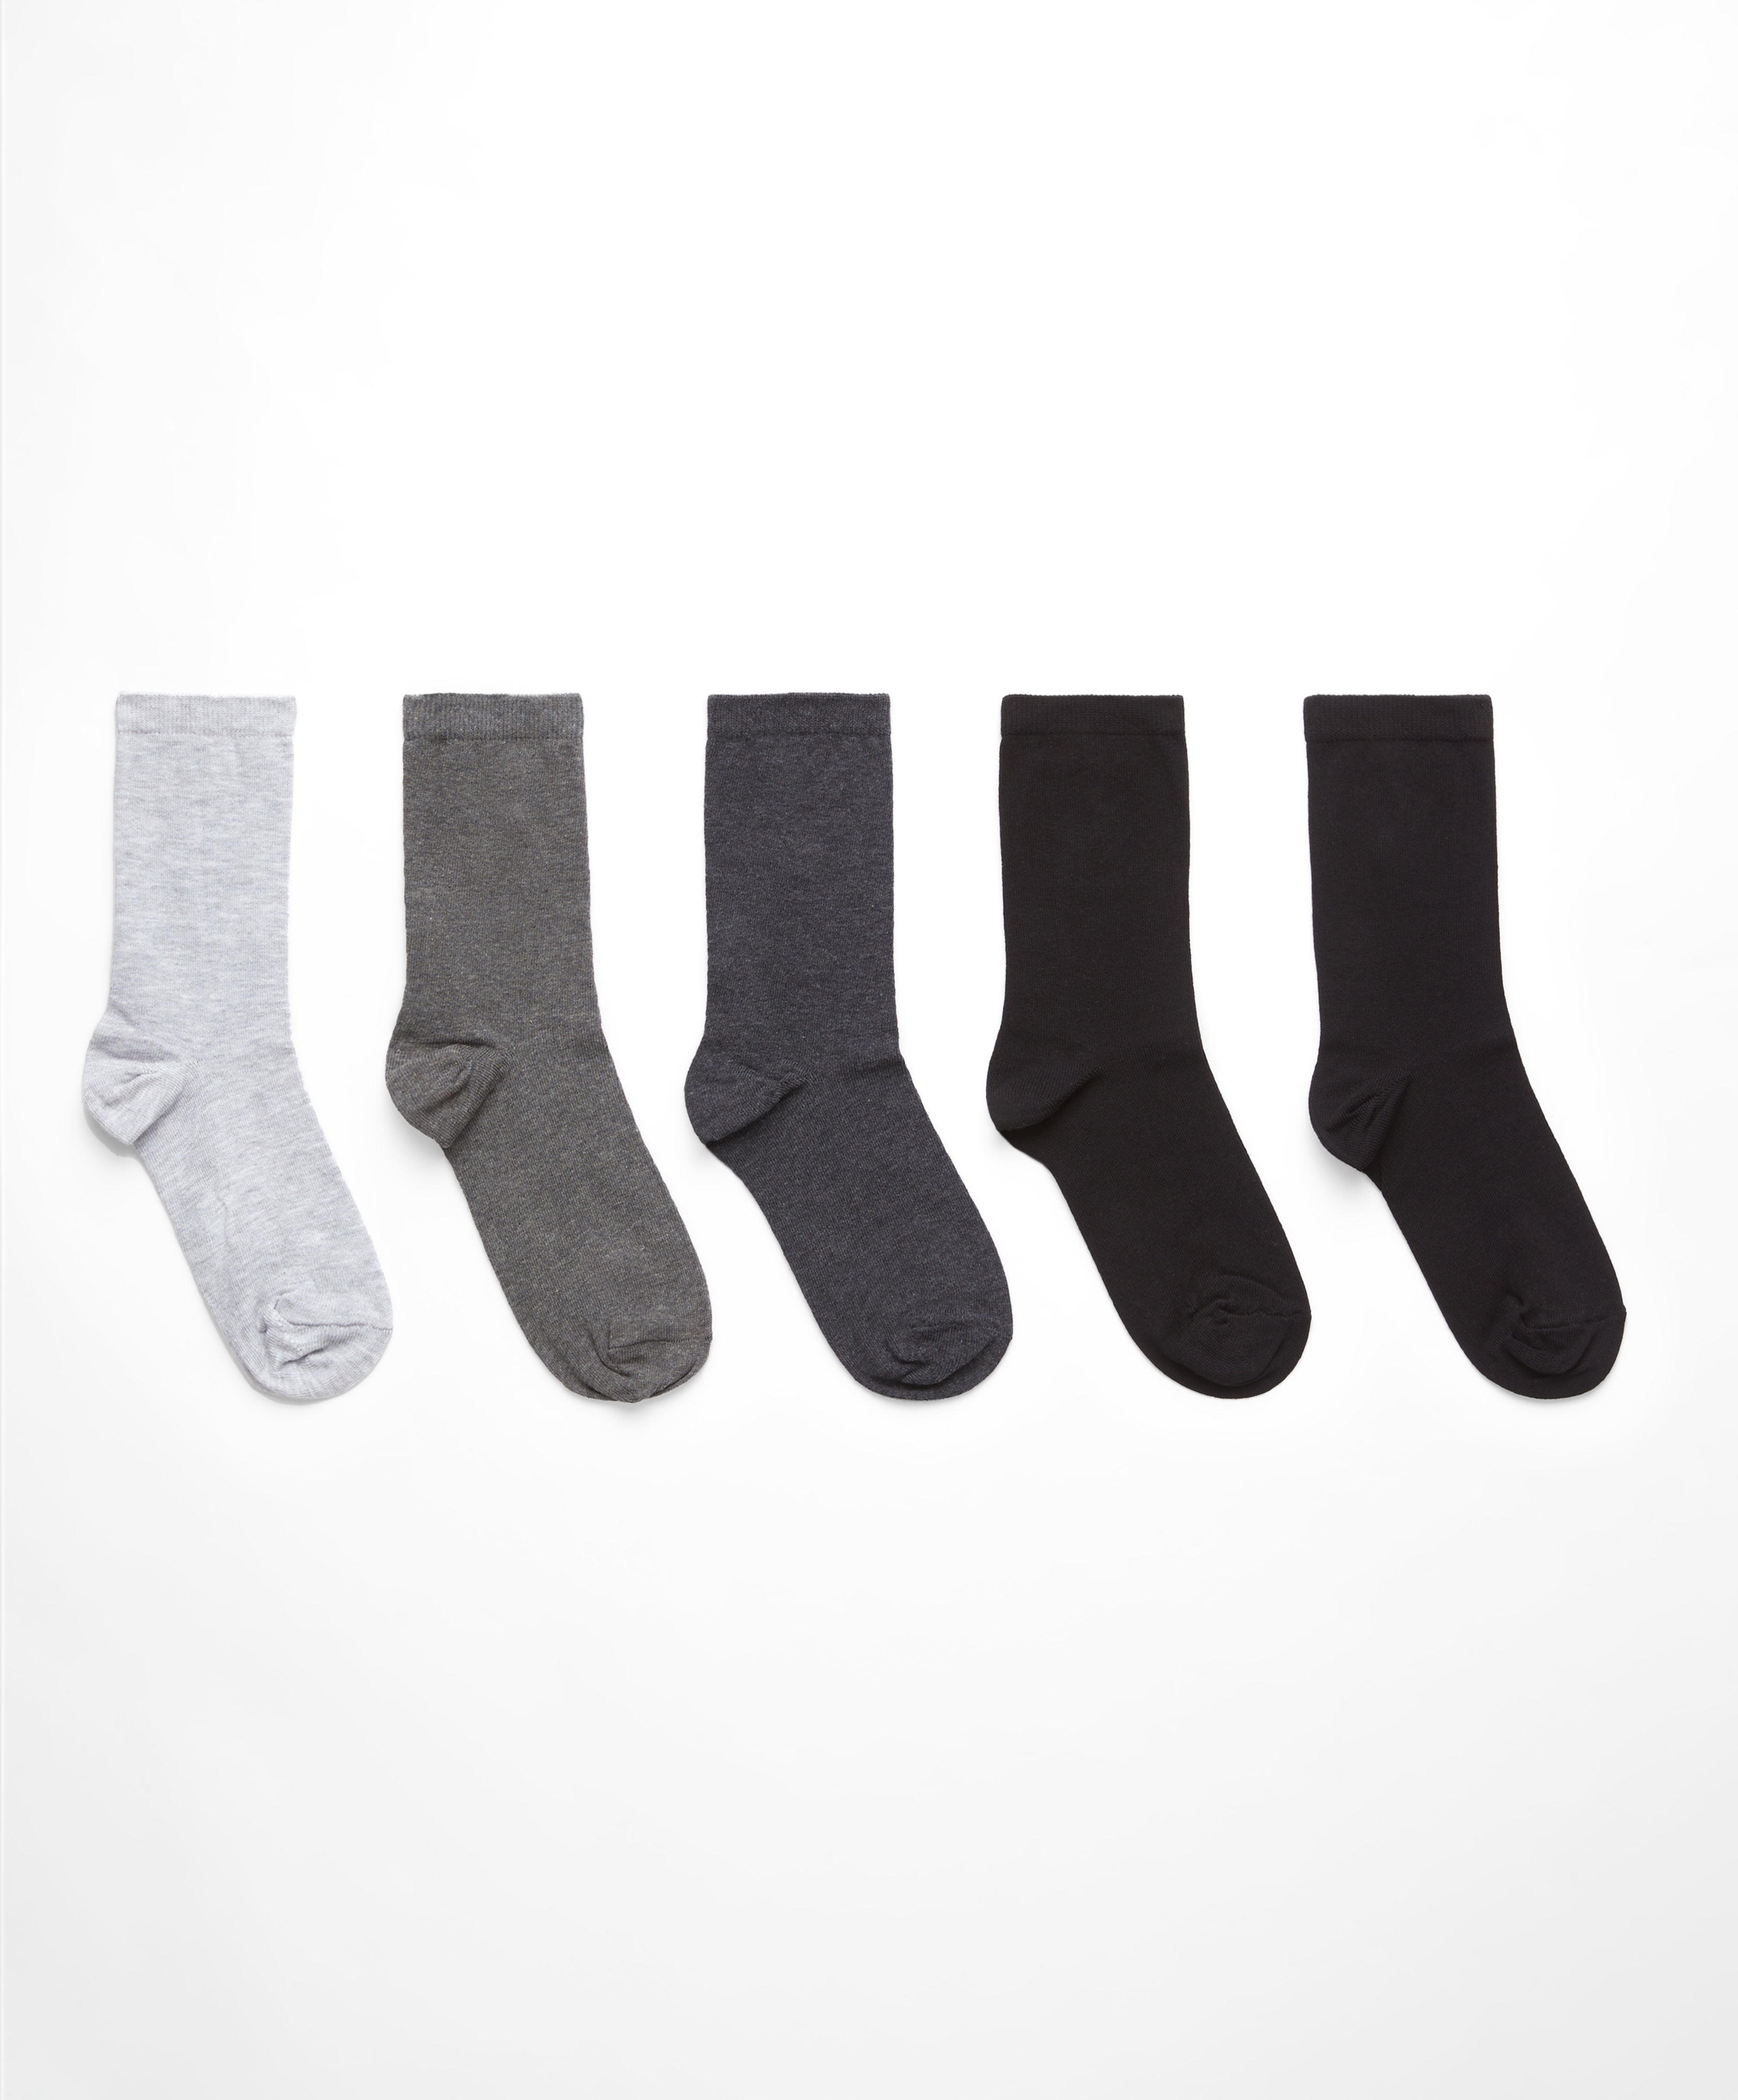 5 pairs of cotton socks